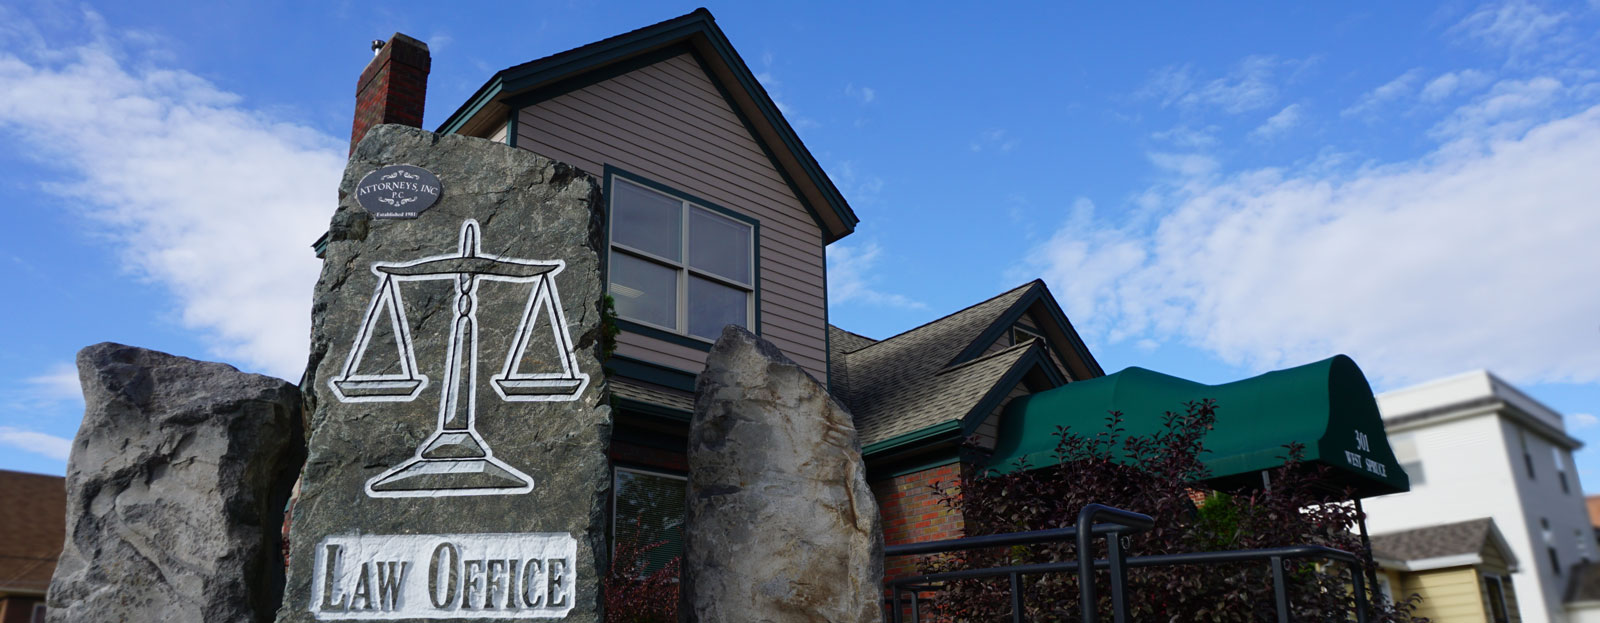 Montana law office